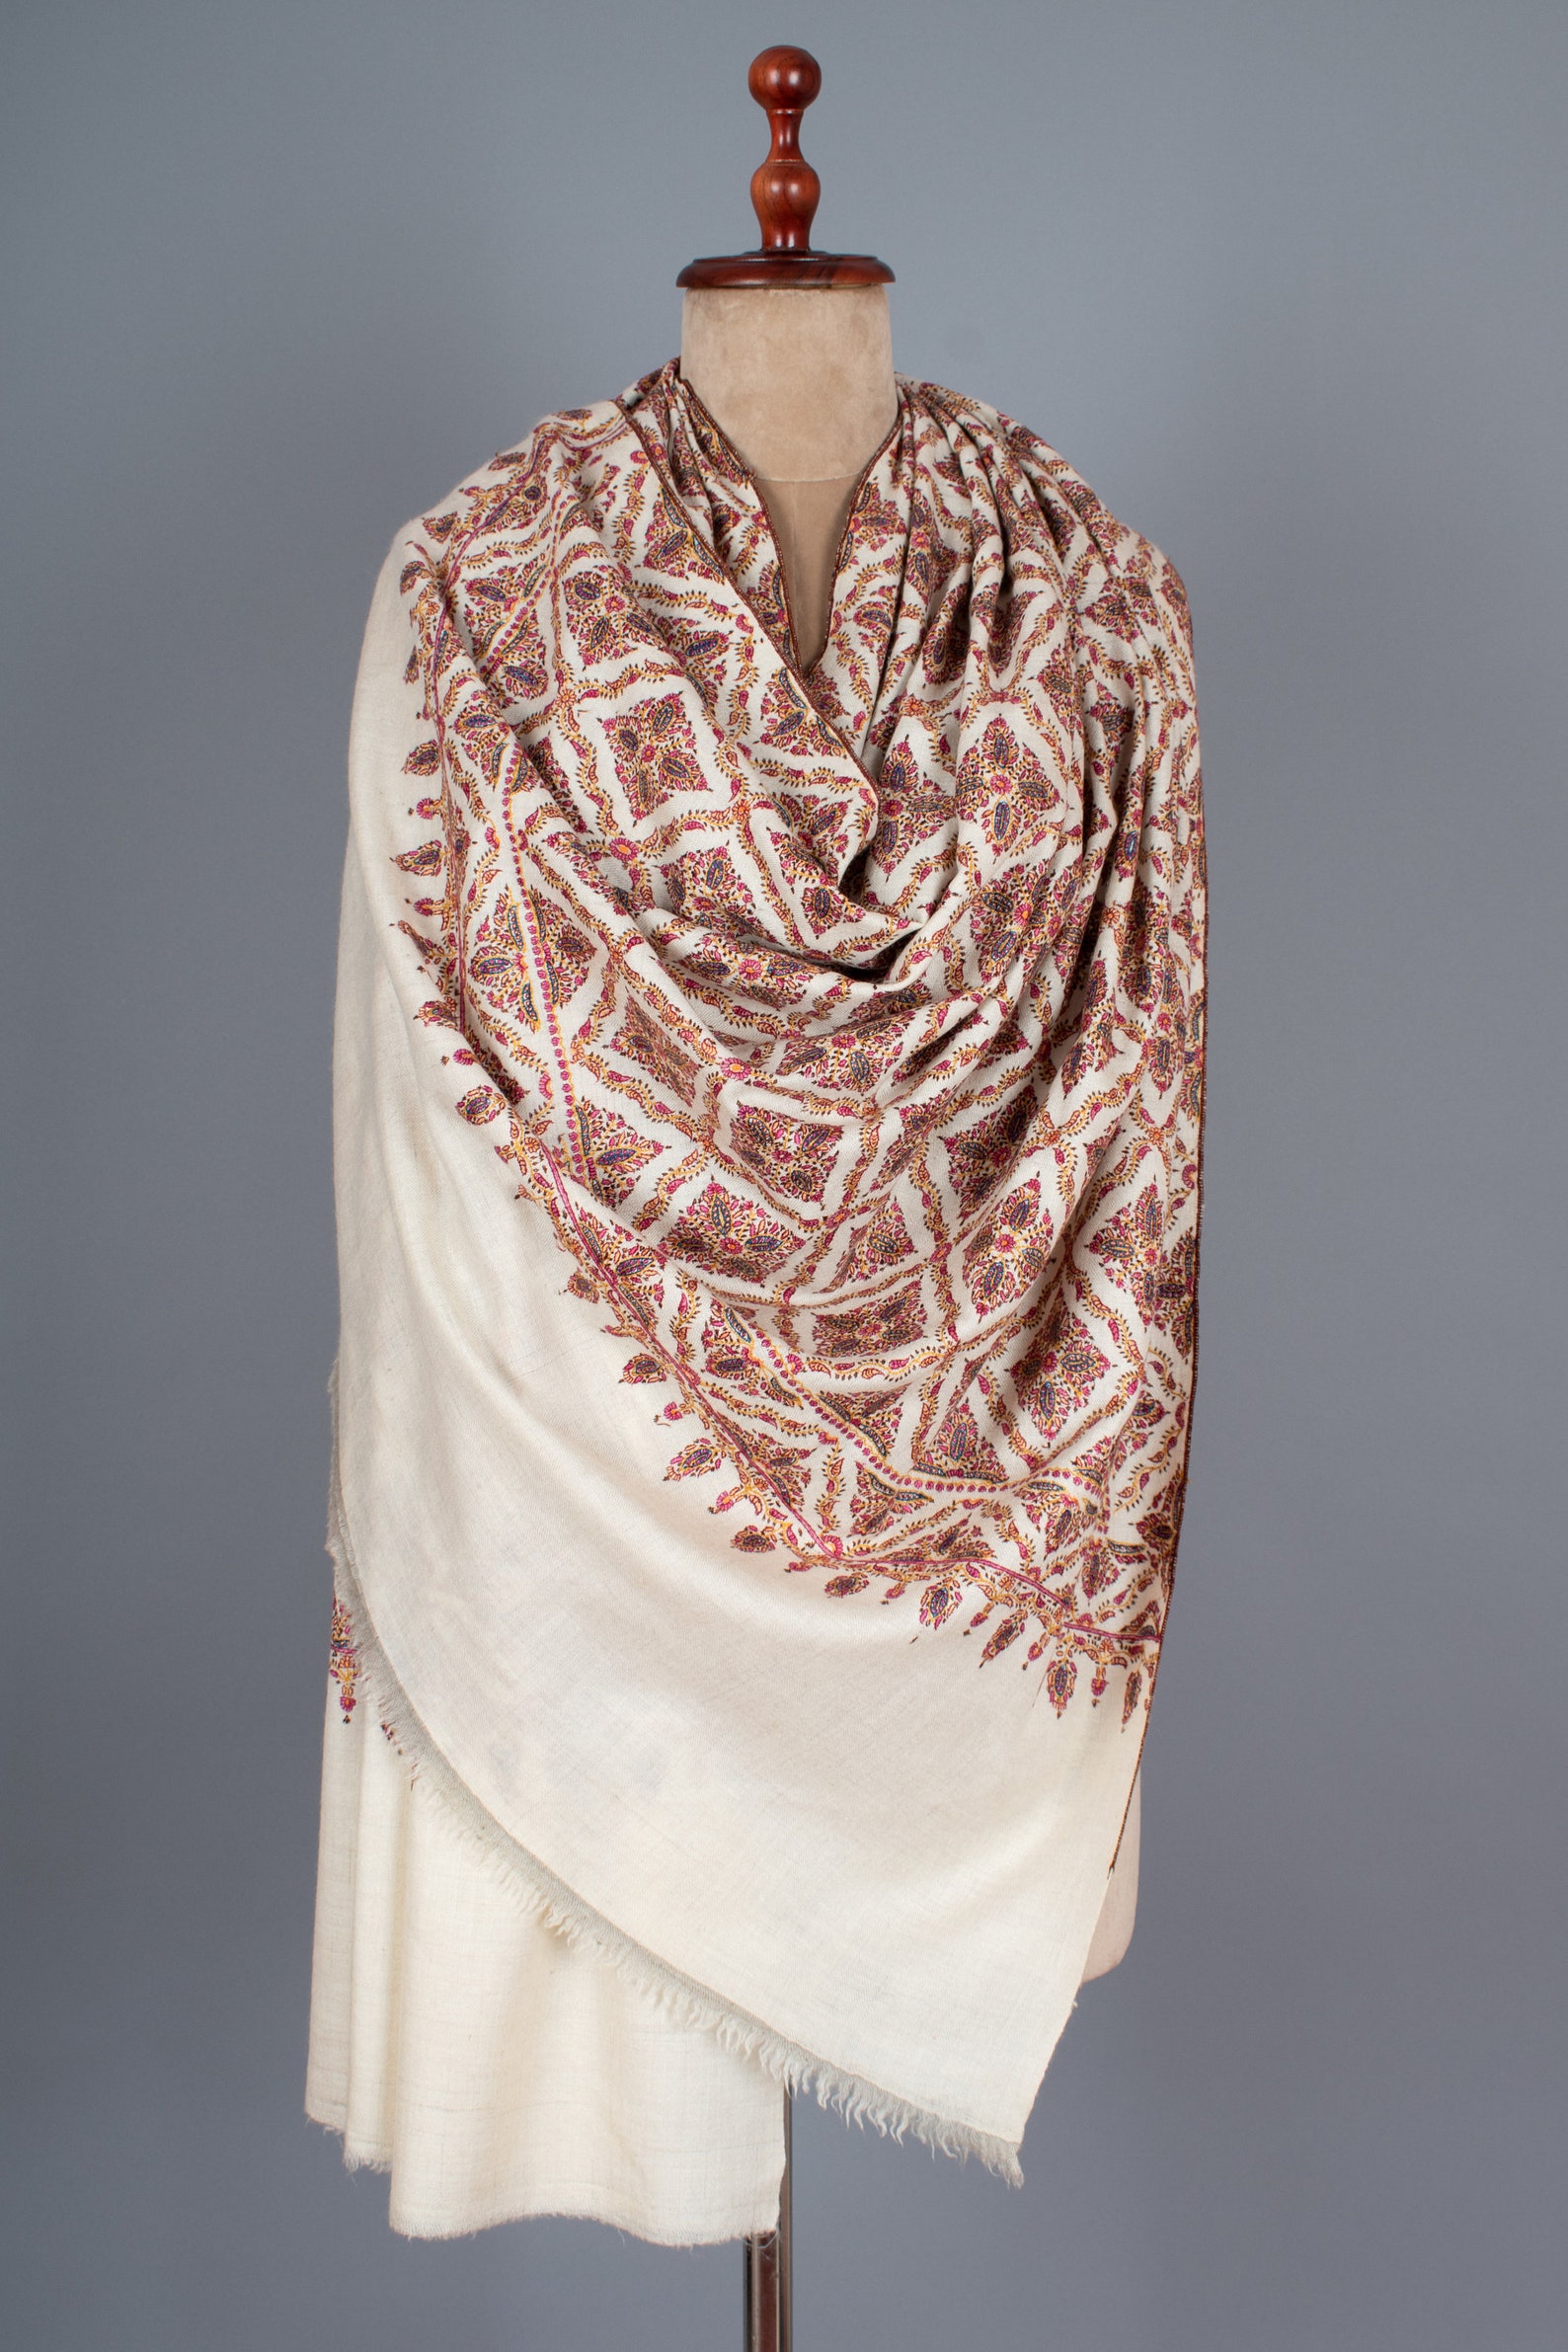 Faleen Natural Pashmina Shawl Sozni Embroidery Wrap Cashmere | Etsy